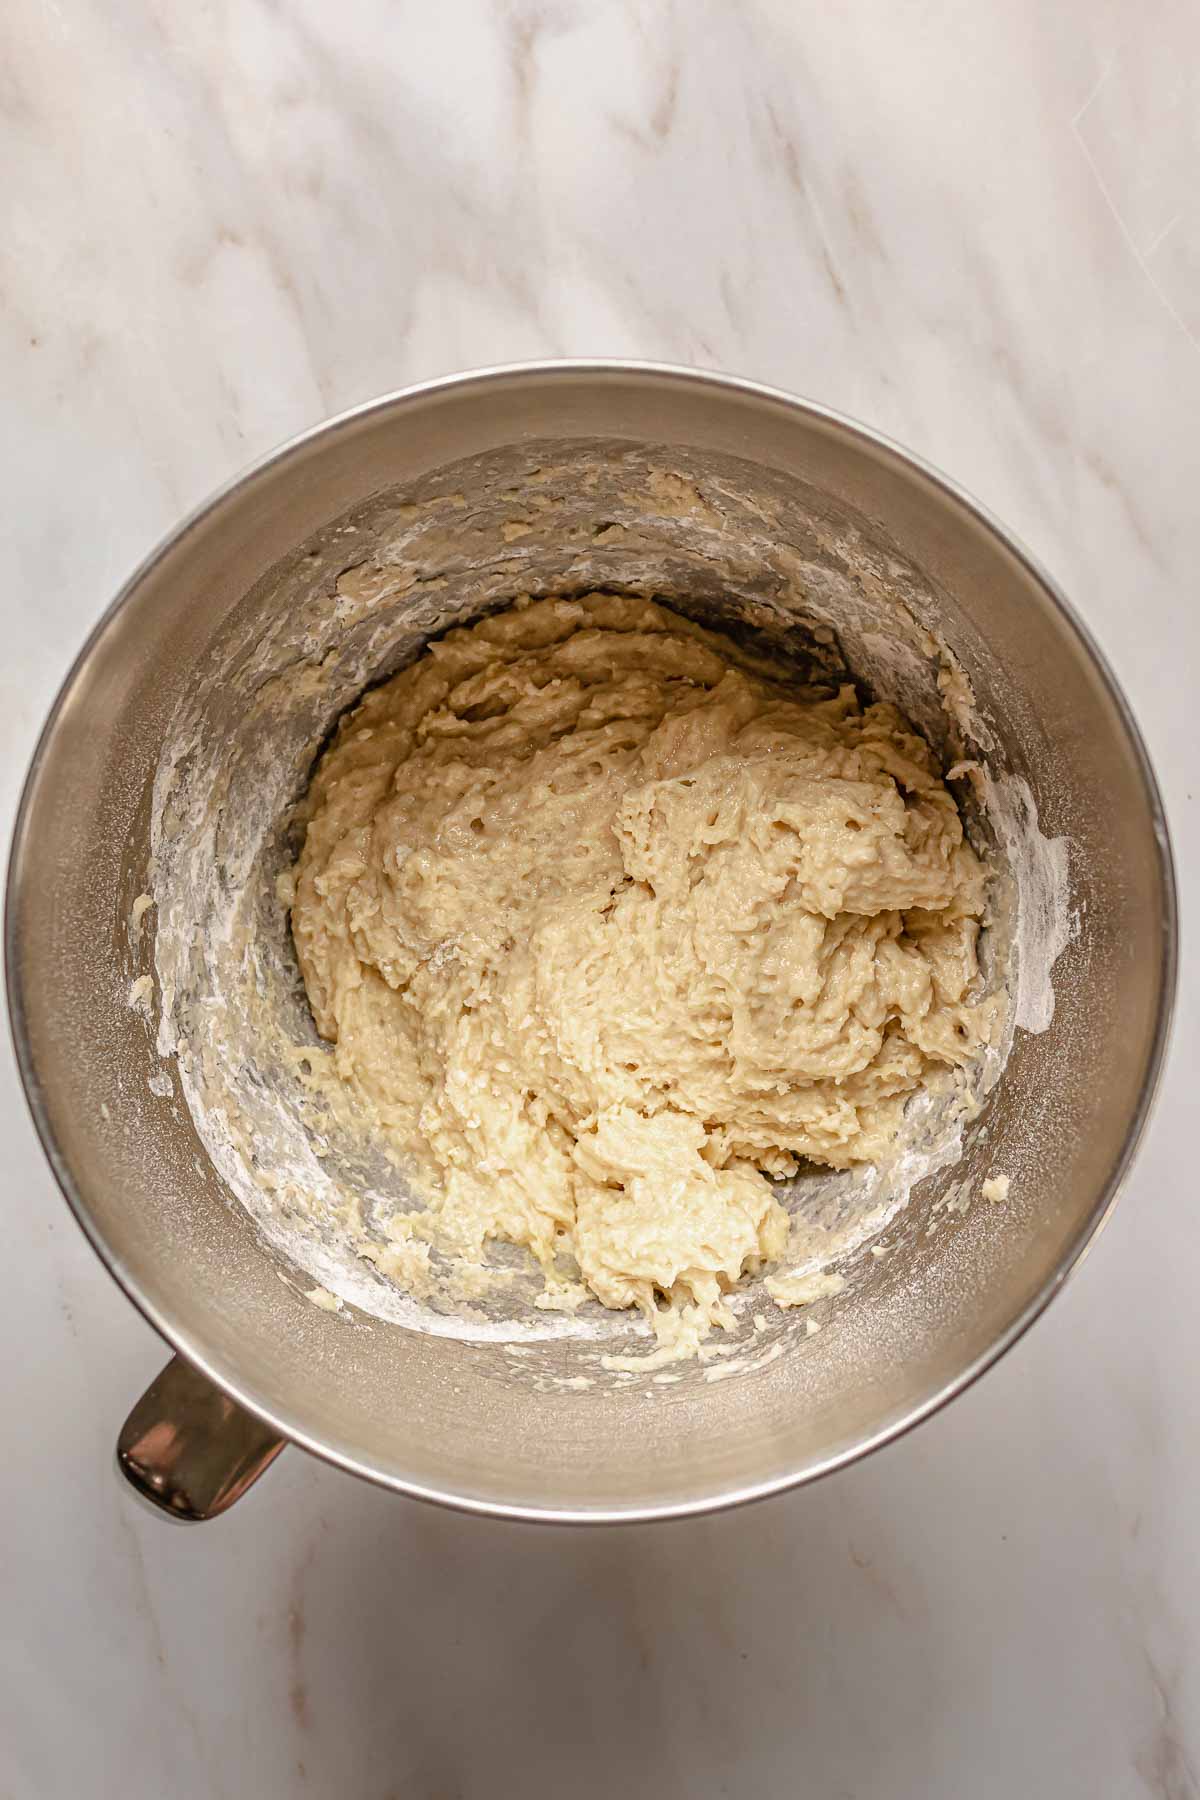 Shaggy brioche dough in a bowl.